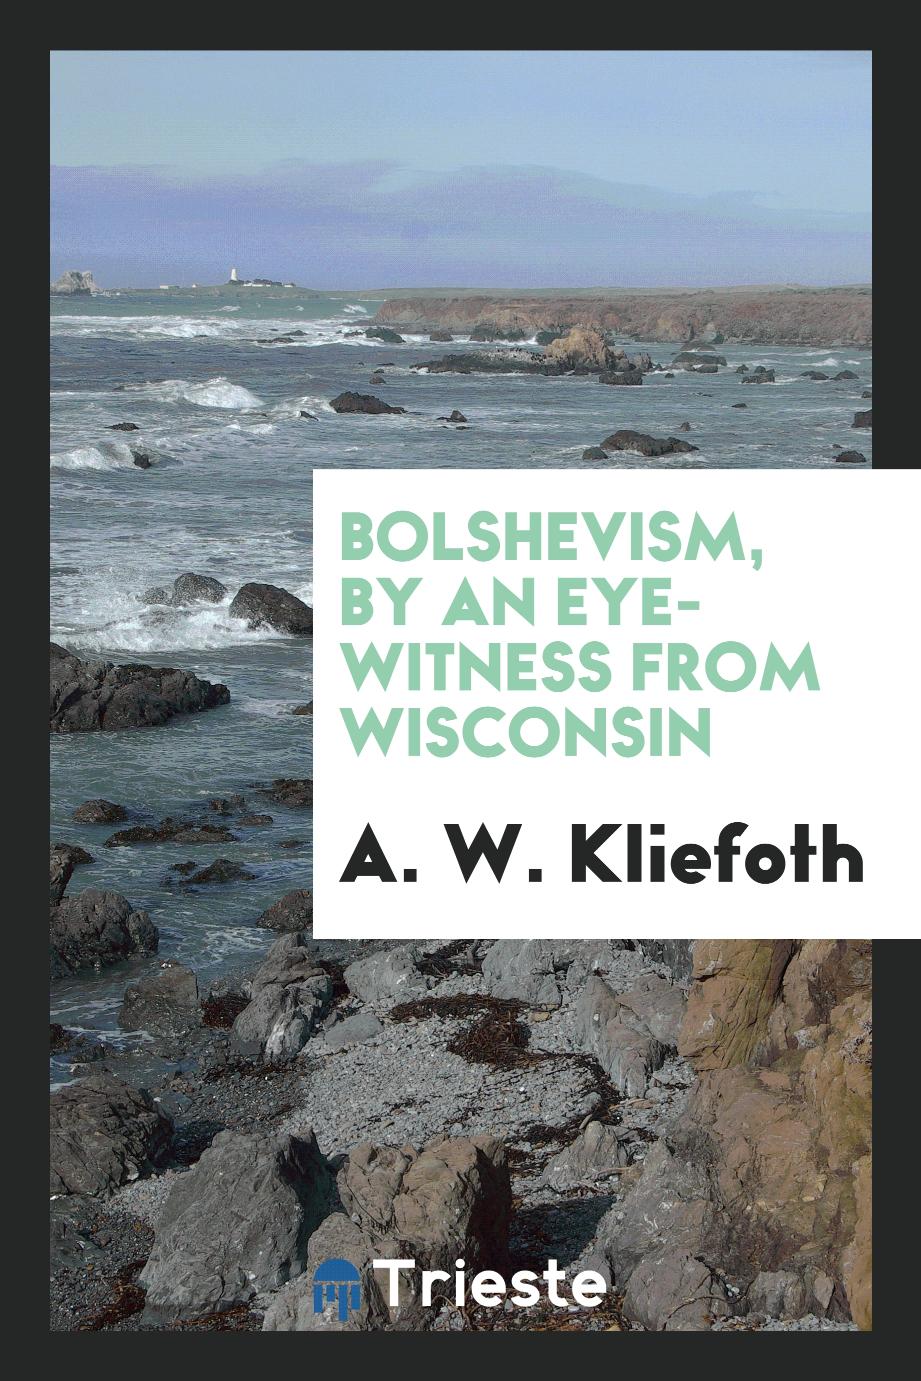 Bolshevism, by an eye-witness from Wisconsin